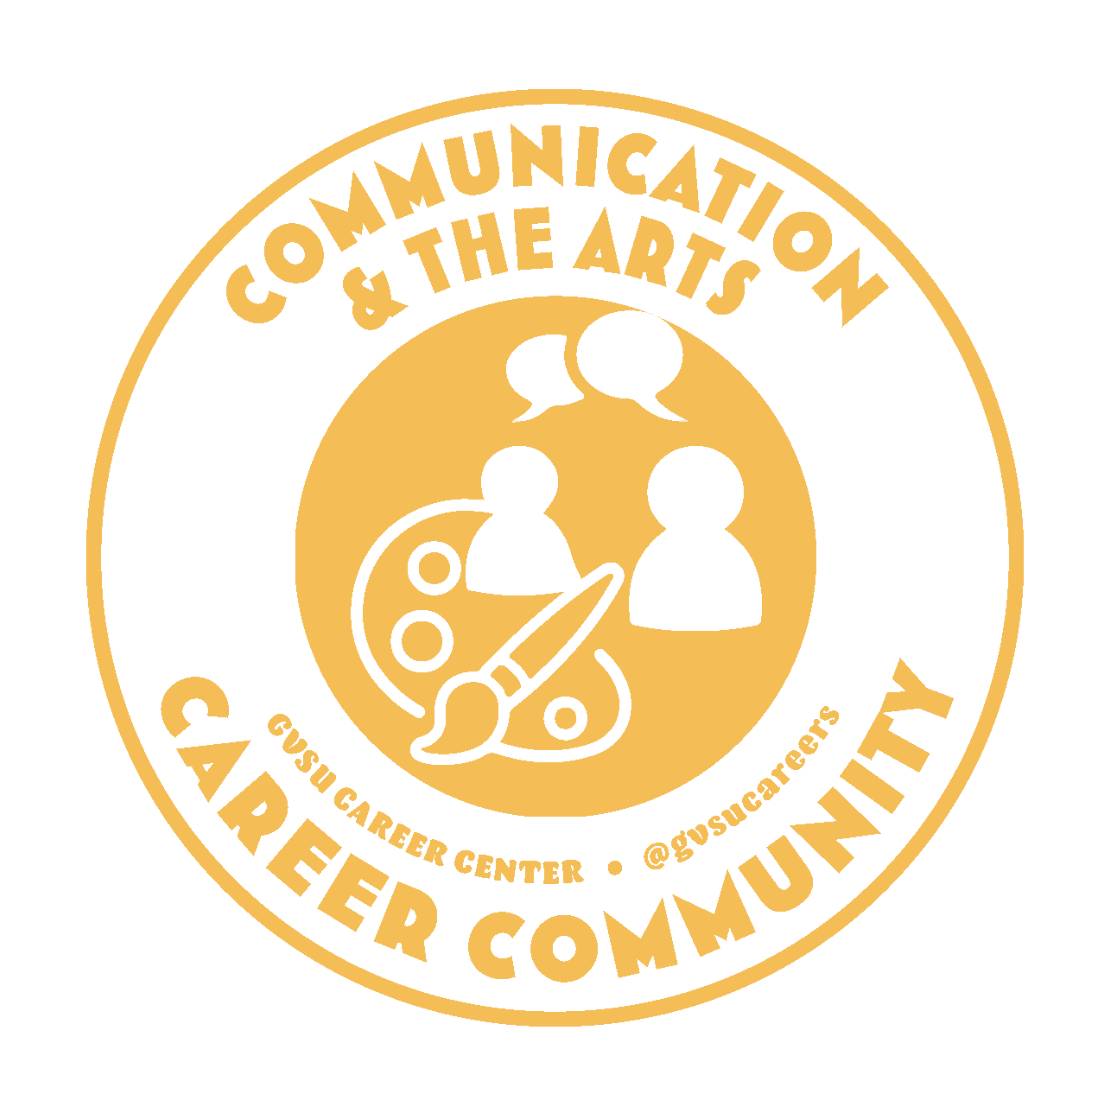 communication and the arts cc logo